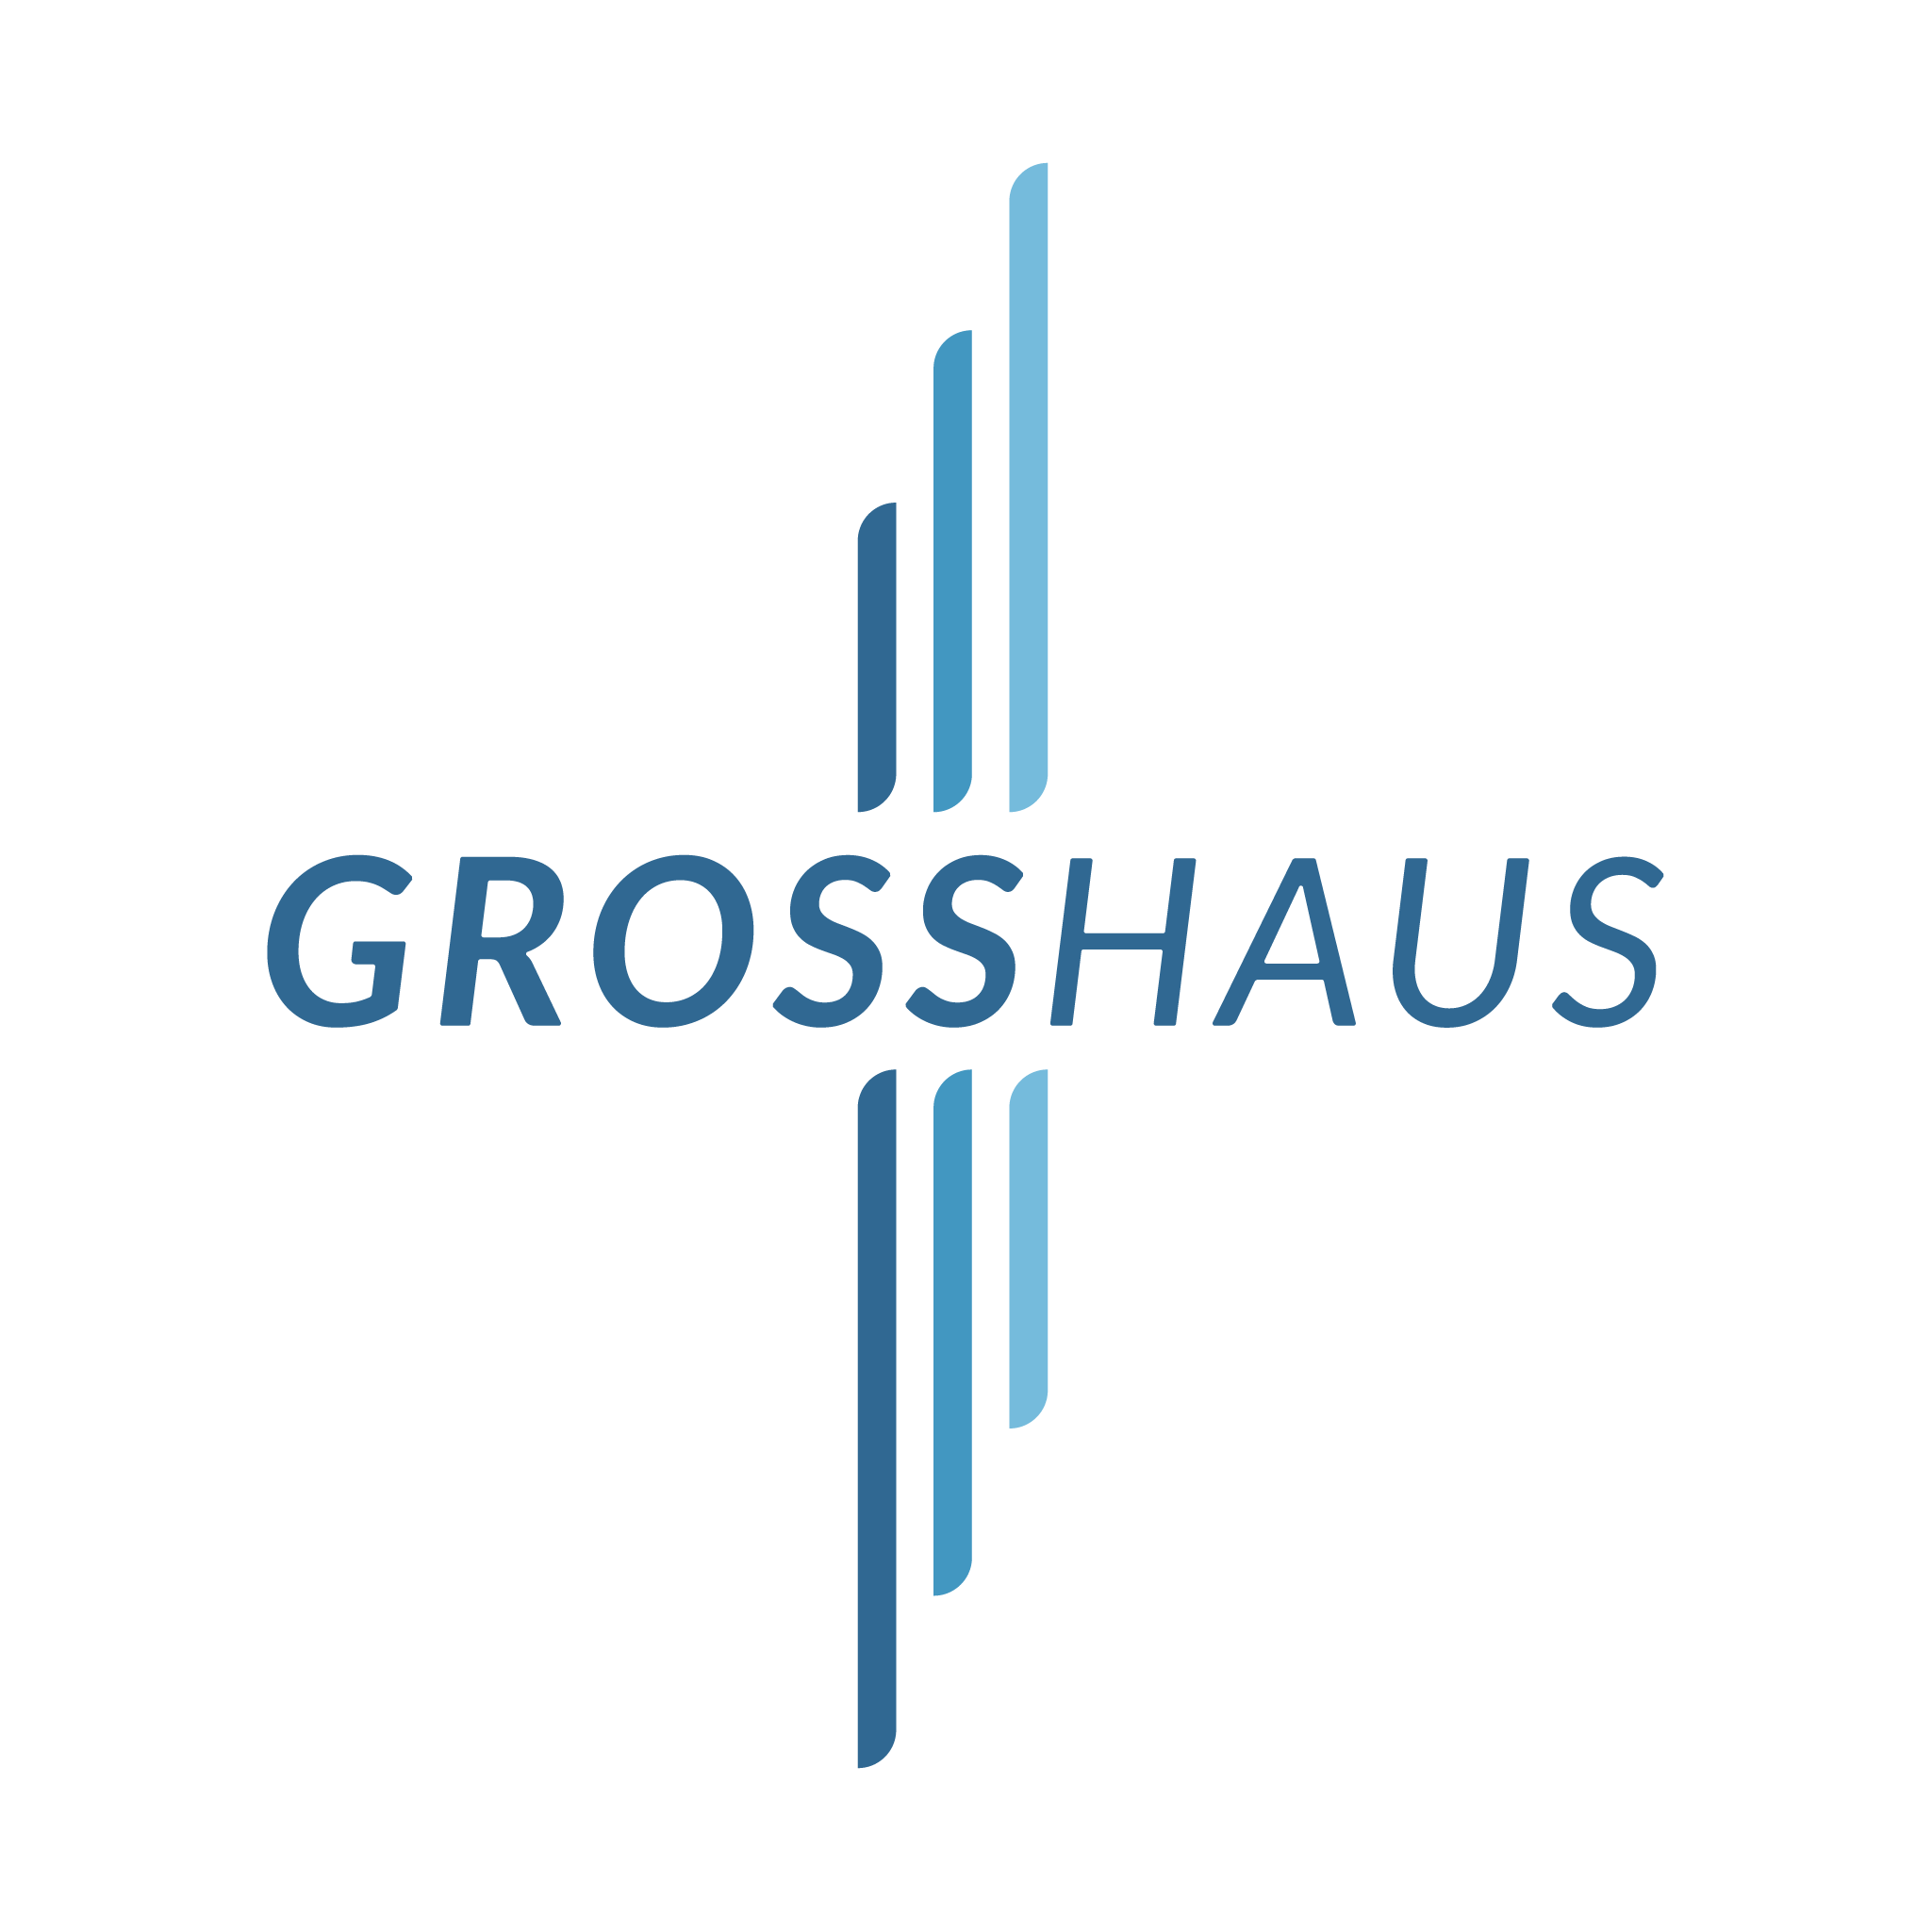 Stiftung Grosshaus Logo